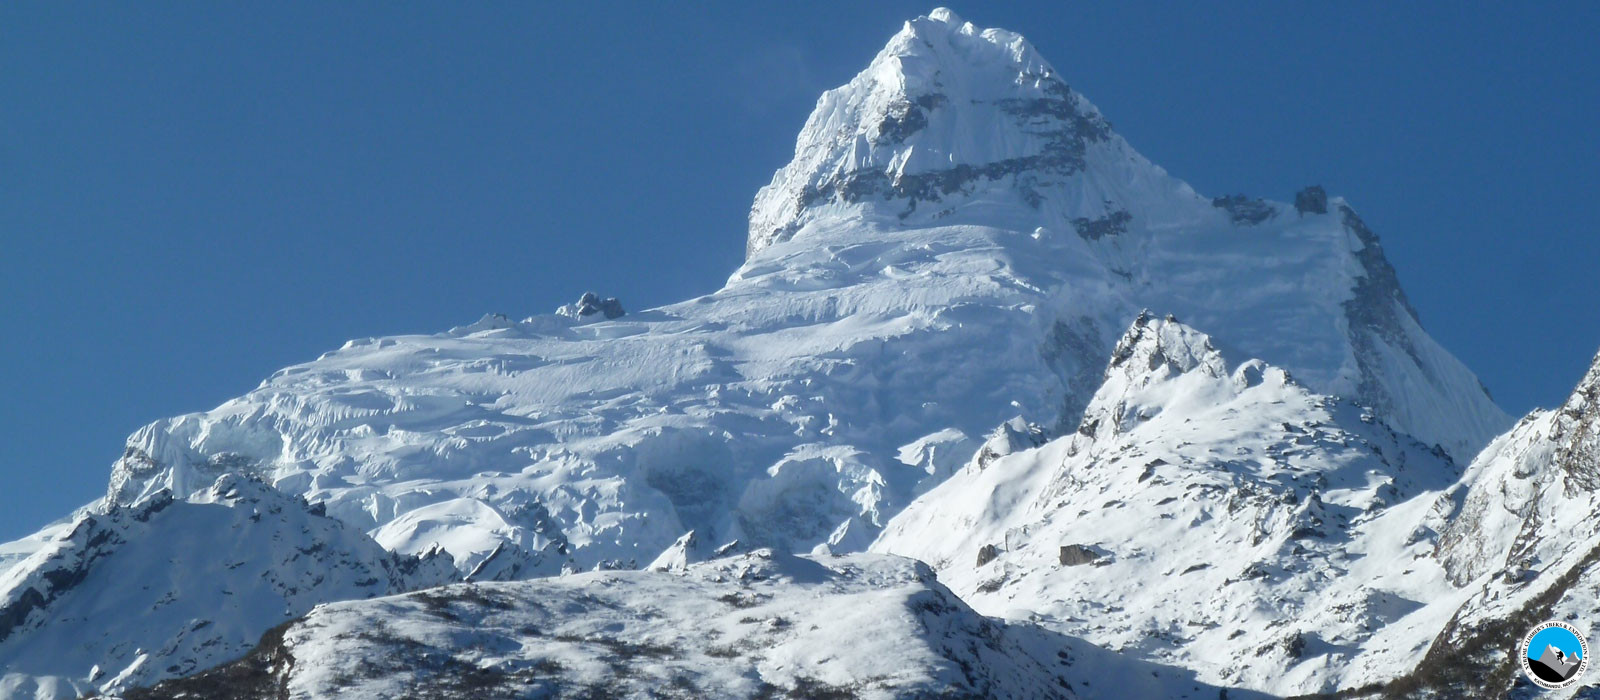 Ganesh Himal Langtang Pangsang La Pass 3,842m. pass Trek